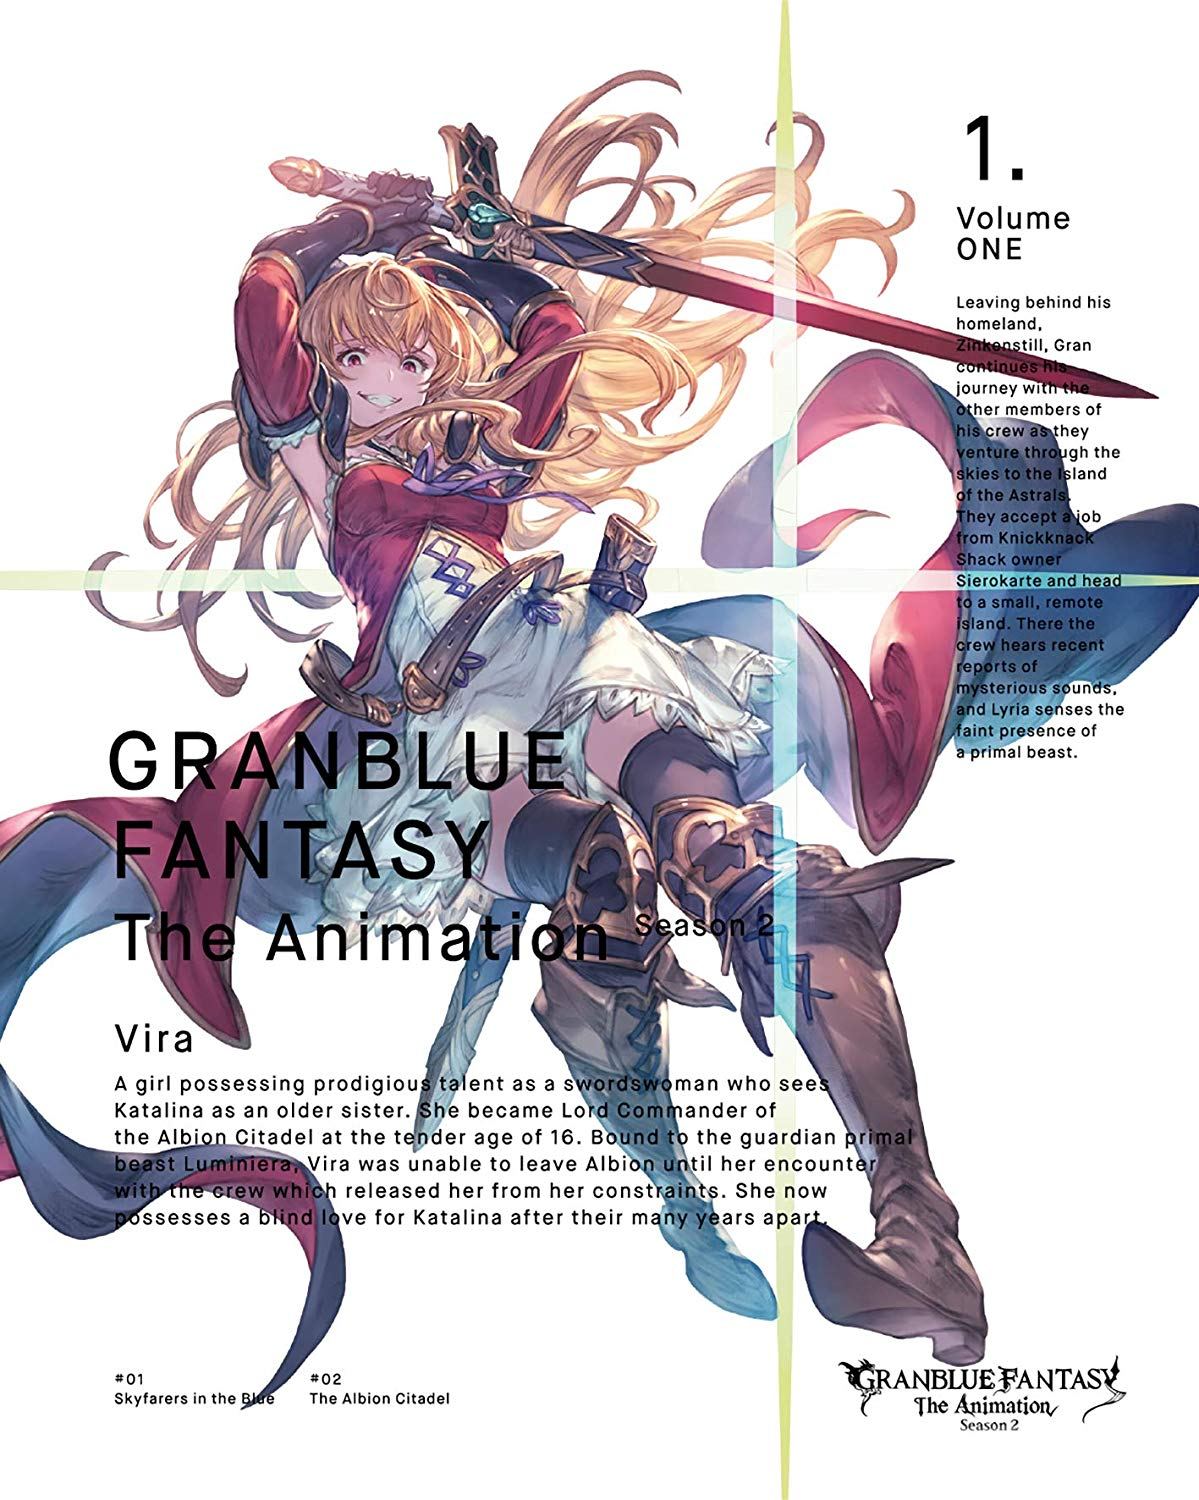 GRANBLUE FANTASY THE ANIMATION Season2 Vol.7 DVD Ltd/Ed ANIPLEX From Japan